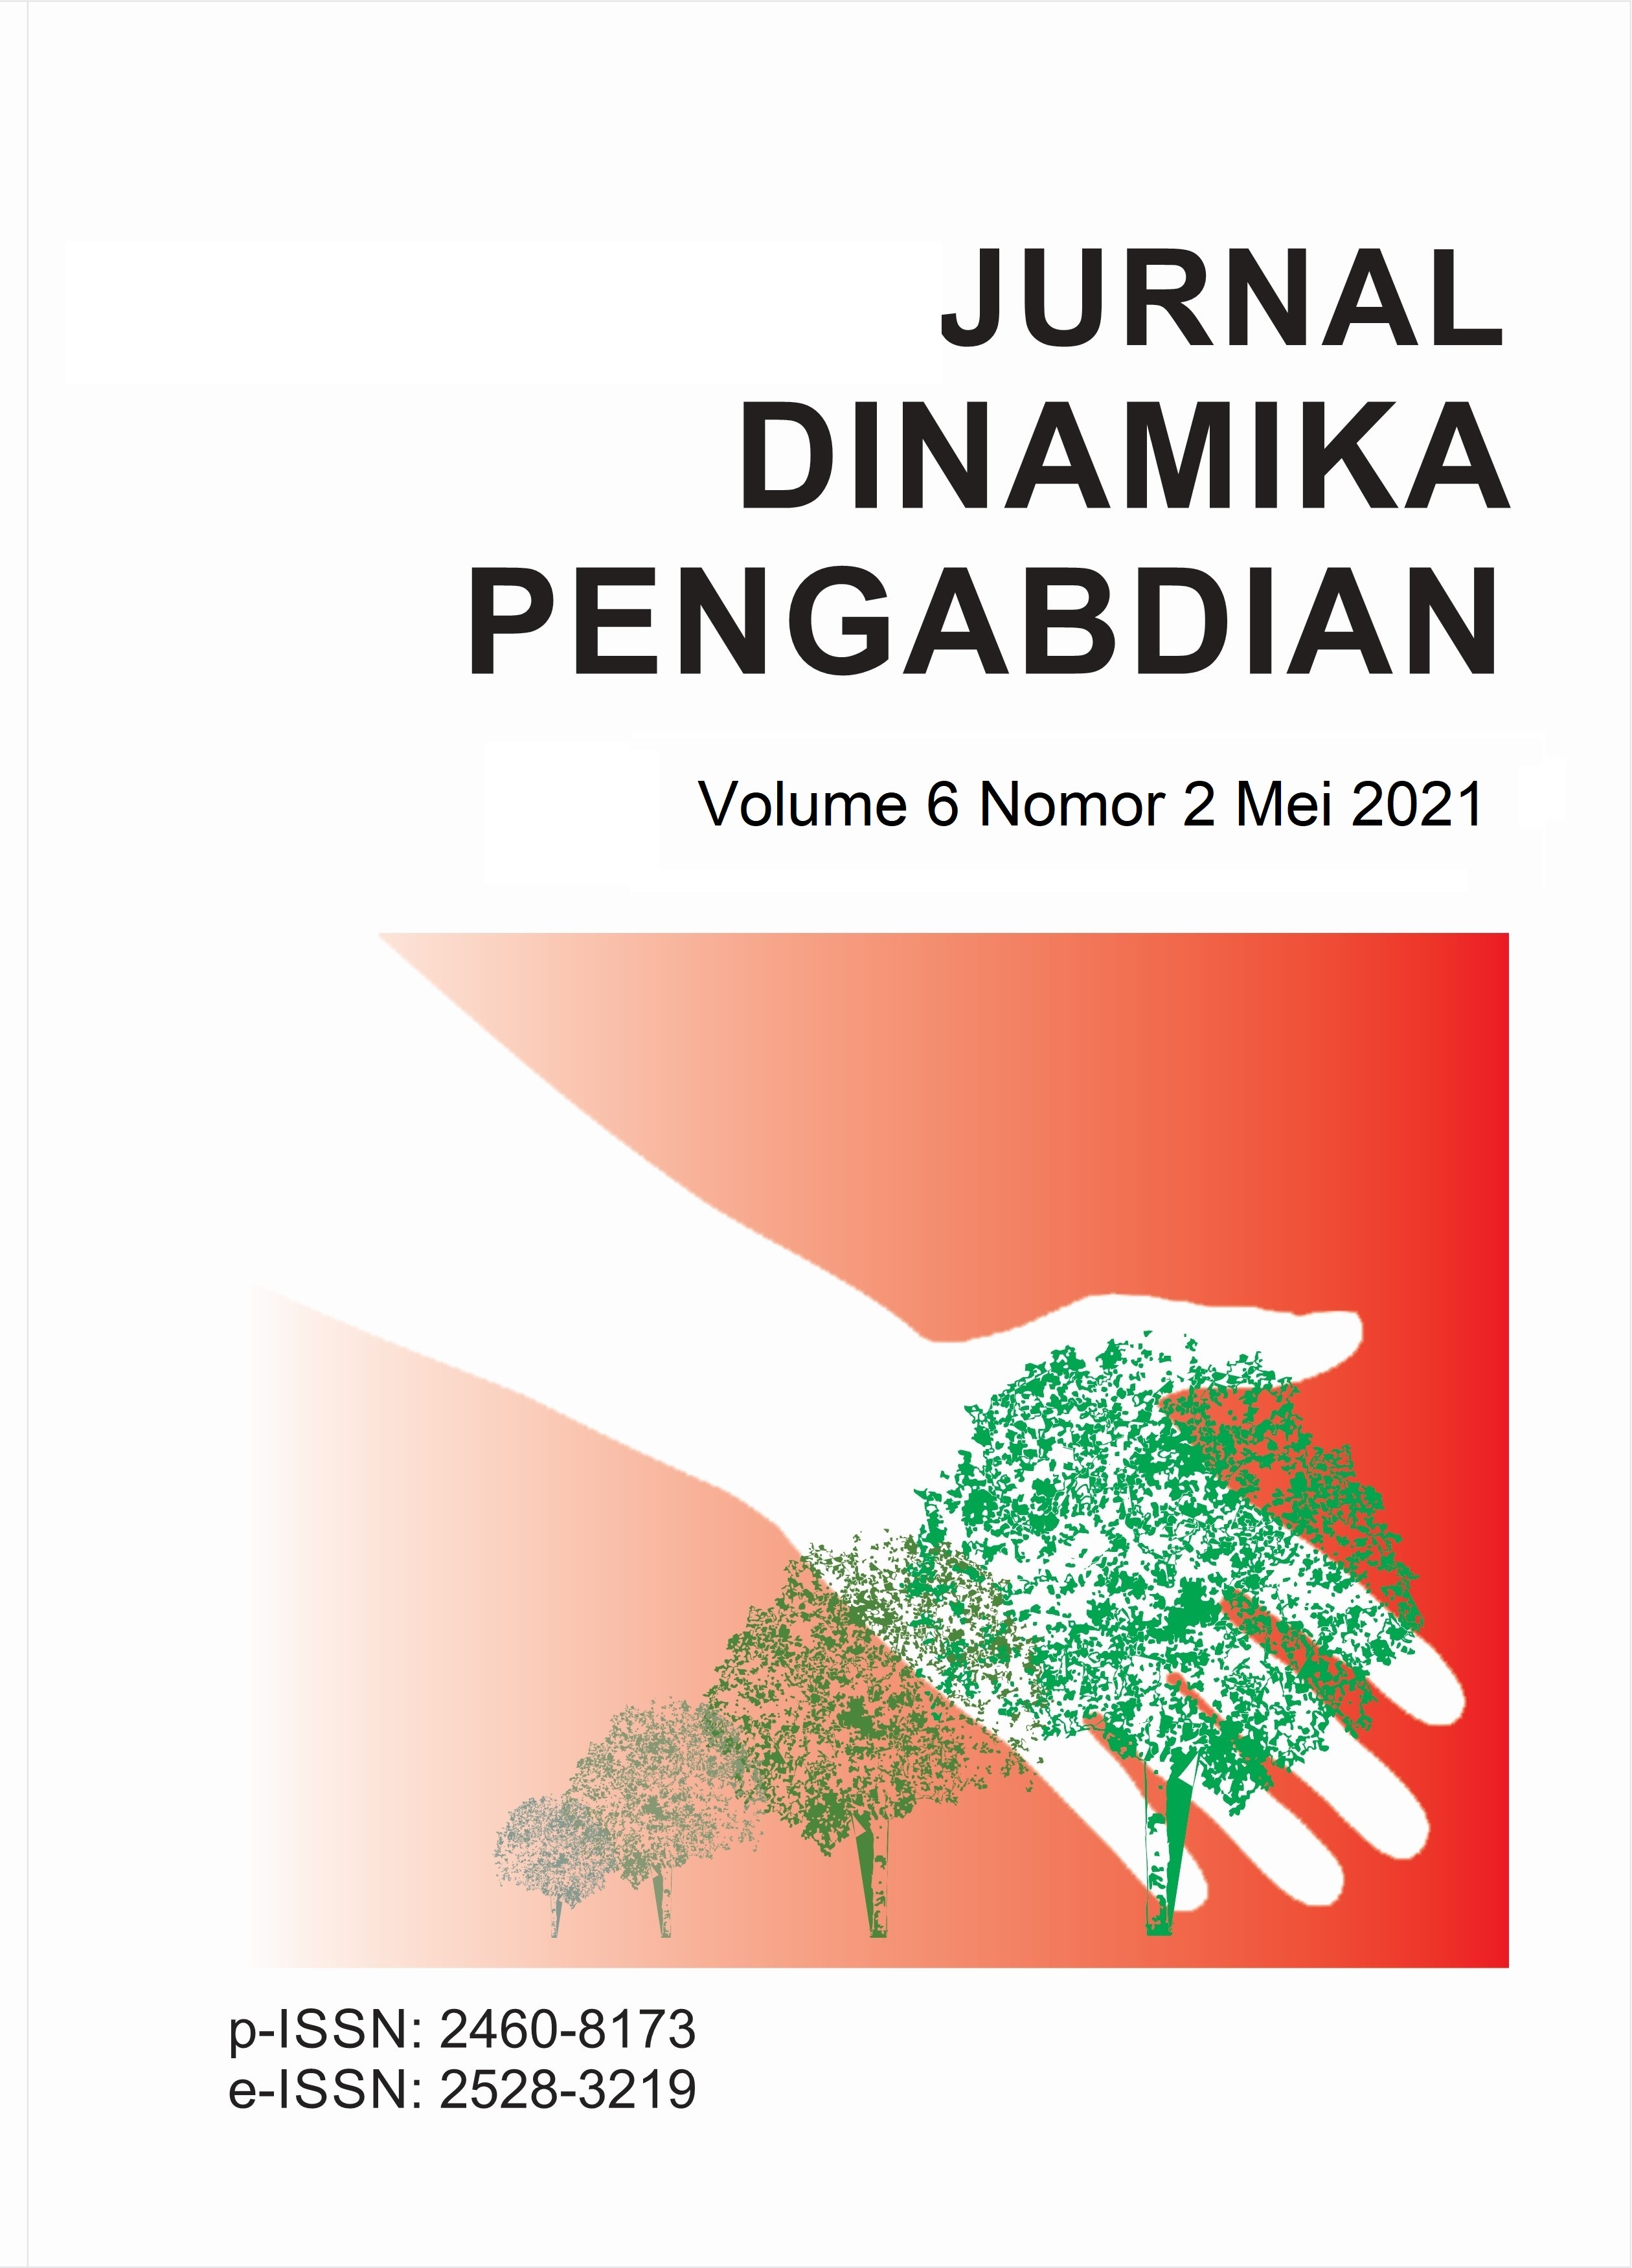 					View Vol. 6 No. 2 (2021): JURNAL DINAMIKA PENGABDIAN VOL. 6 NO. 2 MEI 2021
				